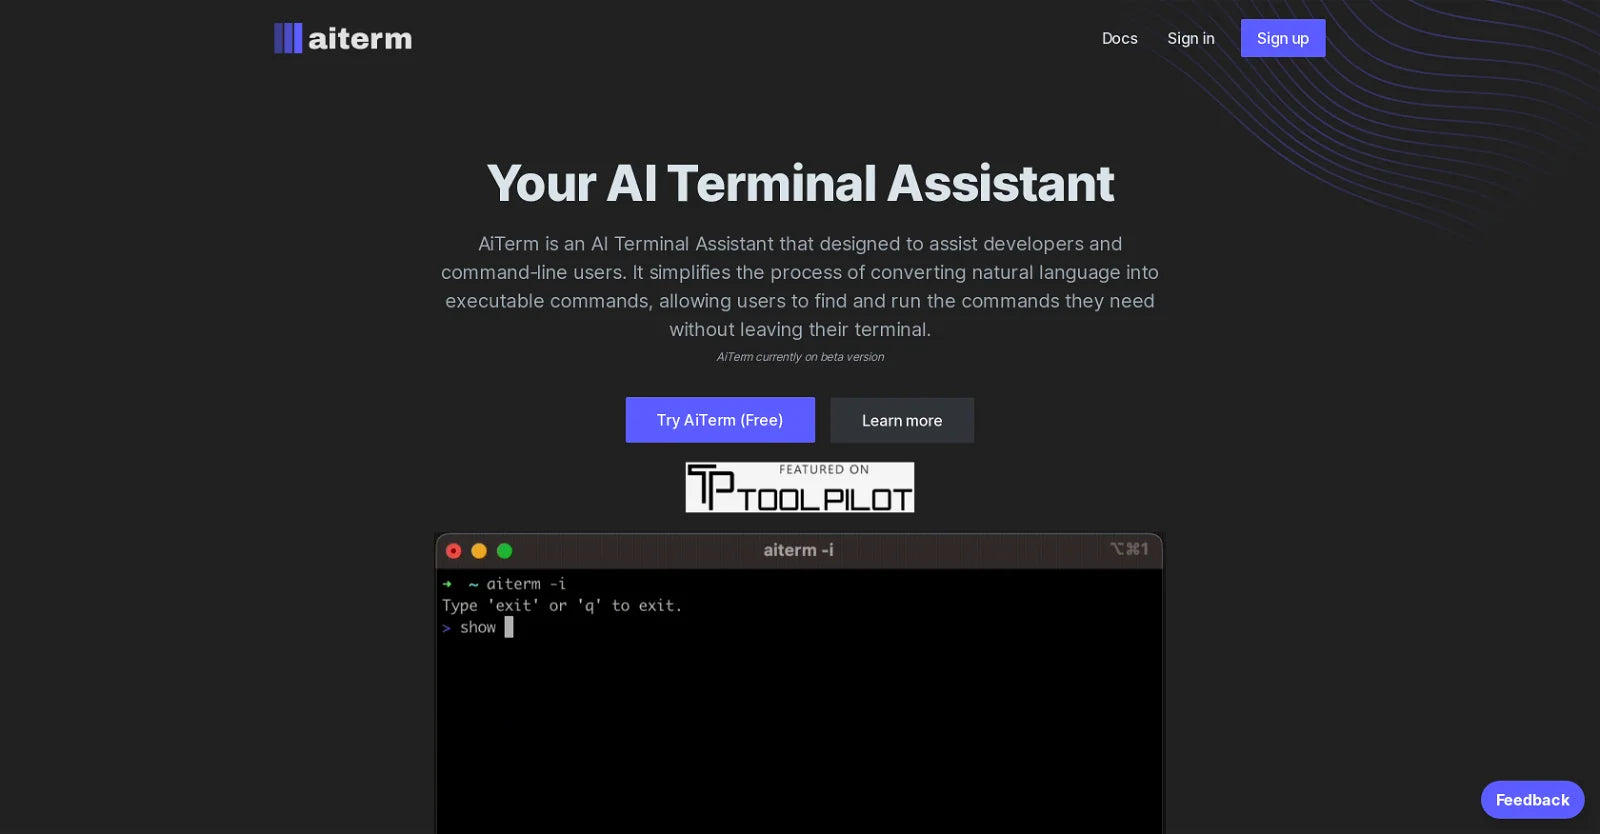 AI Term: Your AI-Powered Terminal Assistant